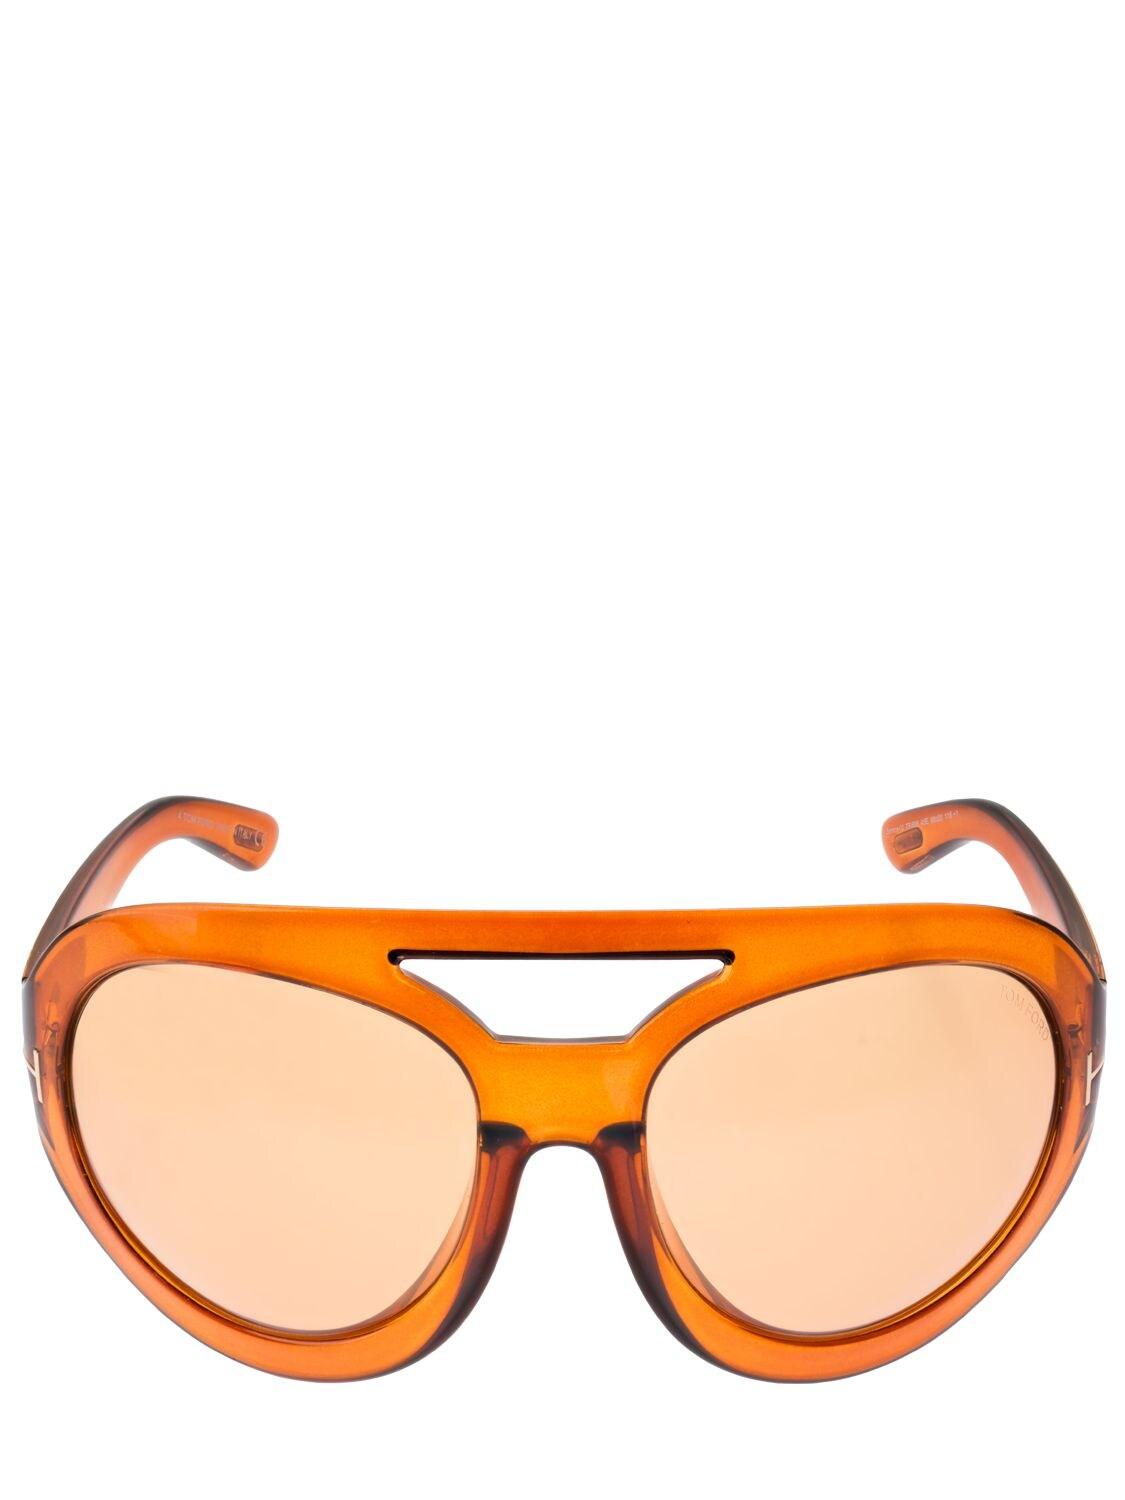 Tom Ford Serena Oversize Round Sunglasses in Orange | Lyst